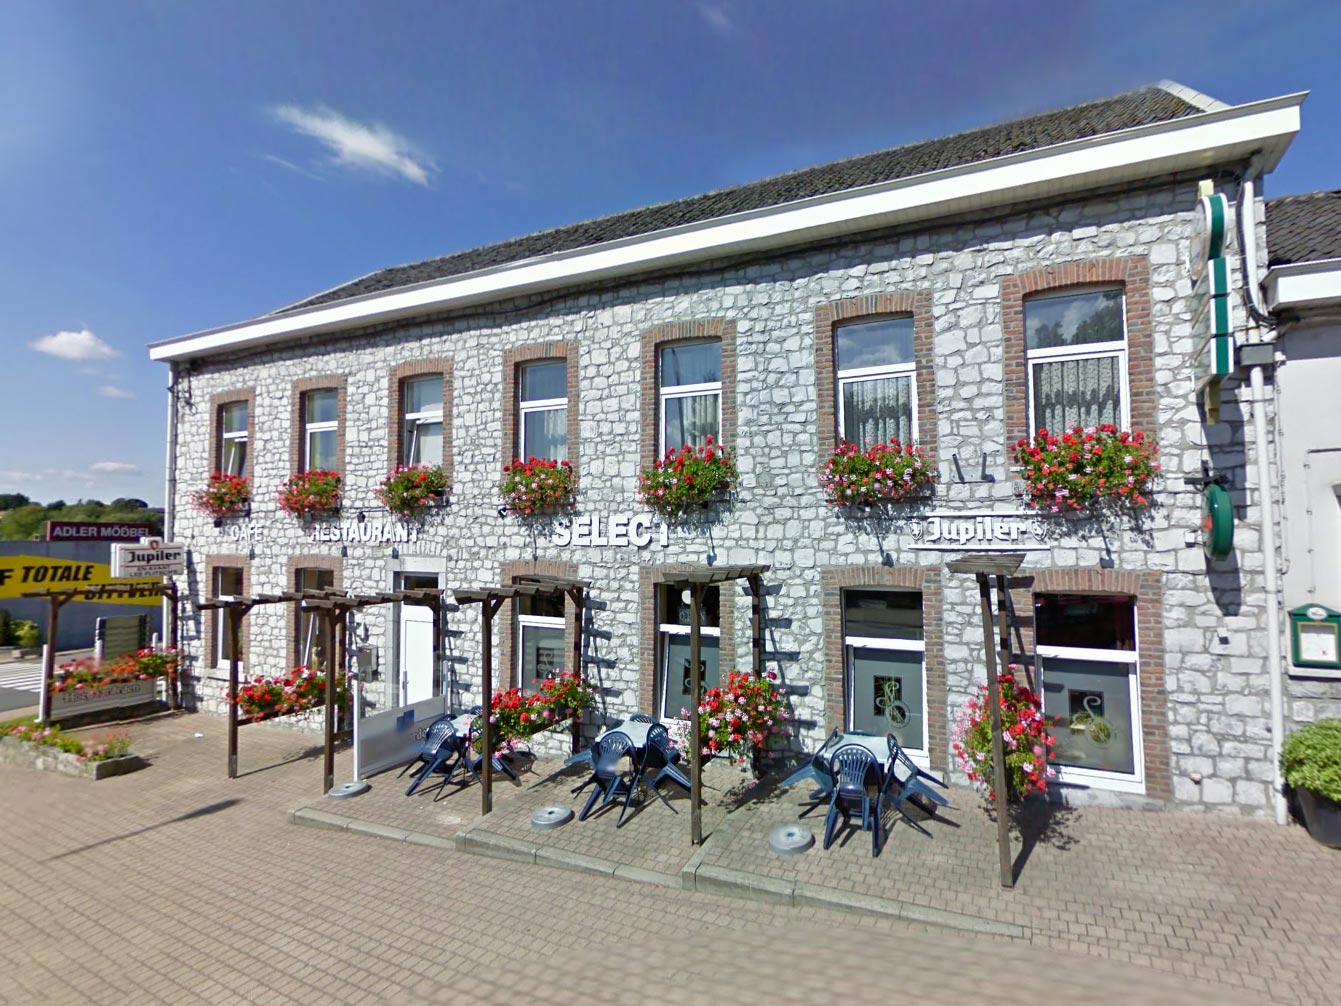 Hotel Bergerhoff / Café Select, Kelmis (Google Streetview)